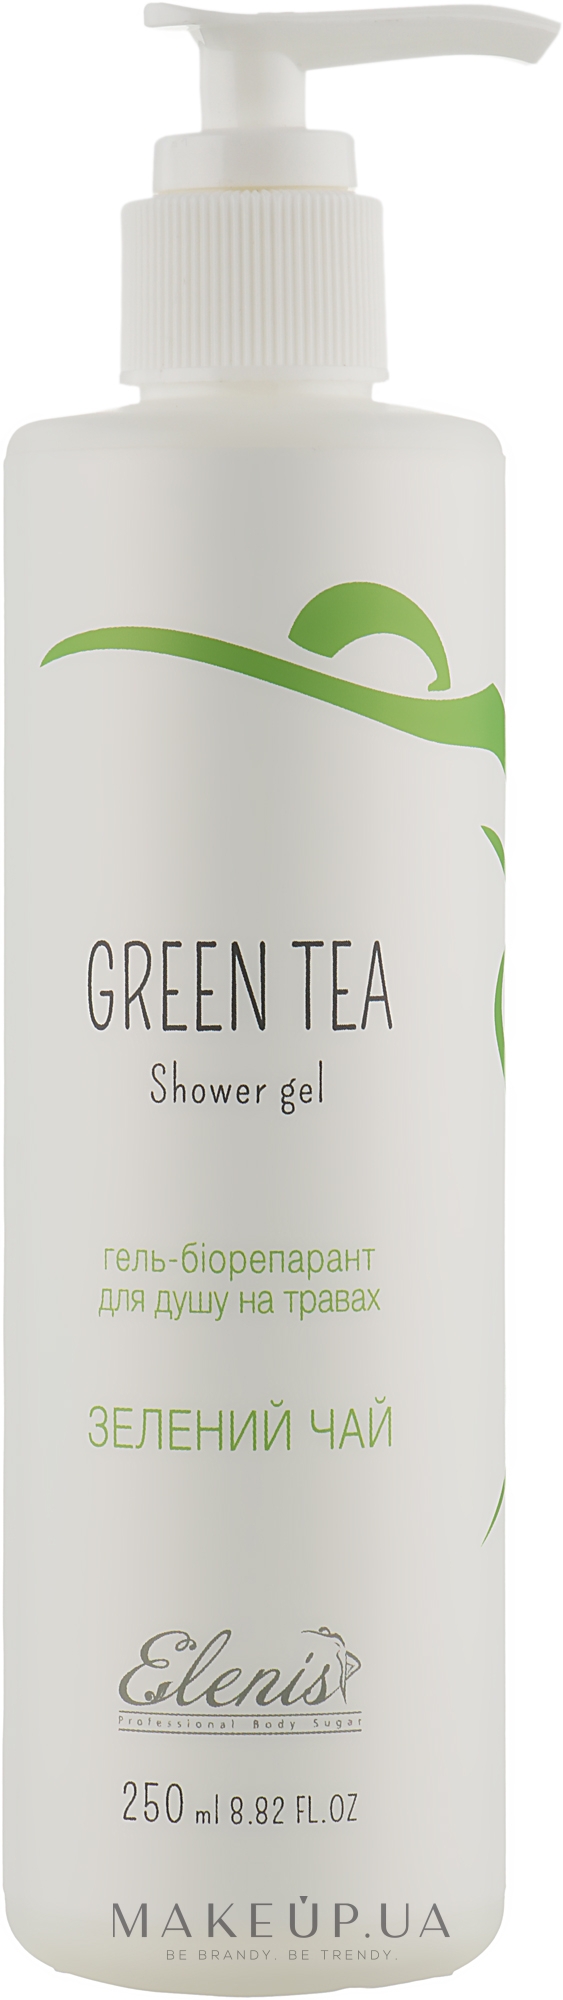 Гель-биорепарант для душа на травах - Elenis Shower Gel Green Tea — фото 250ml